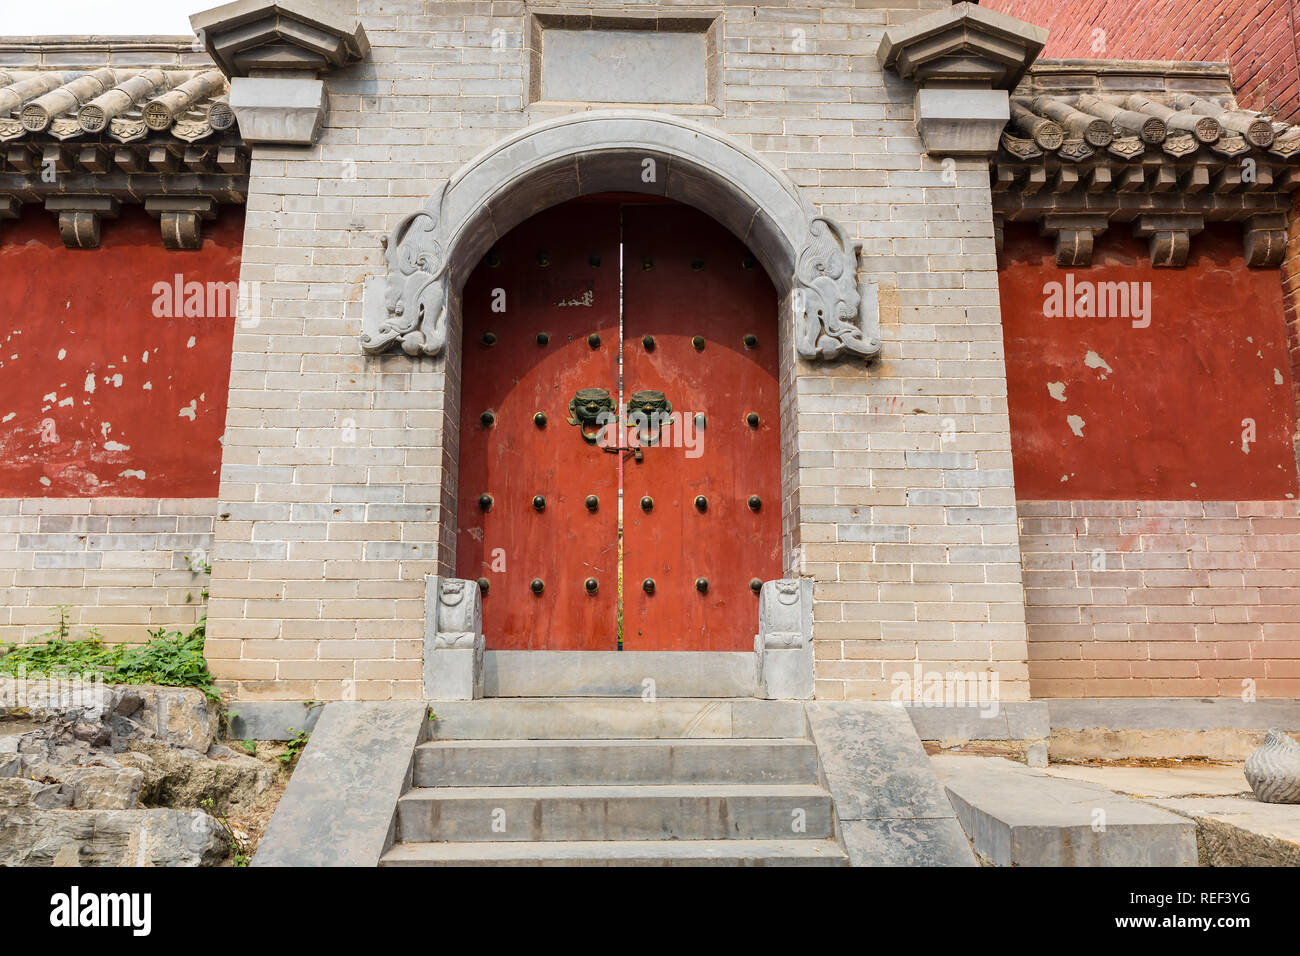 Dengfeng, China - 17. Oktober 2018: In einem alten Stein Tür innen Shaolin Tempel songshan Dengfeng city Provinz Henan in China. Stockfoto